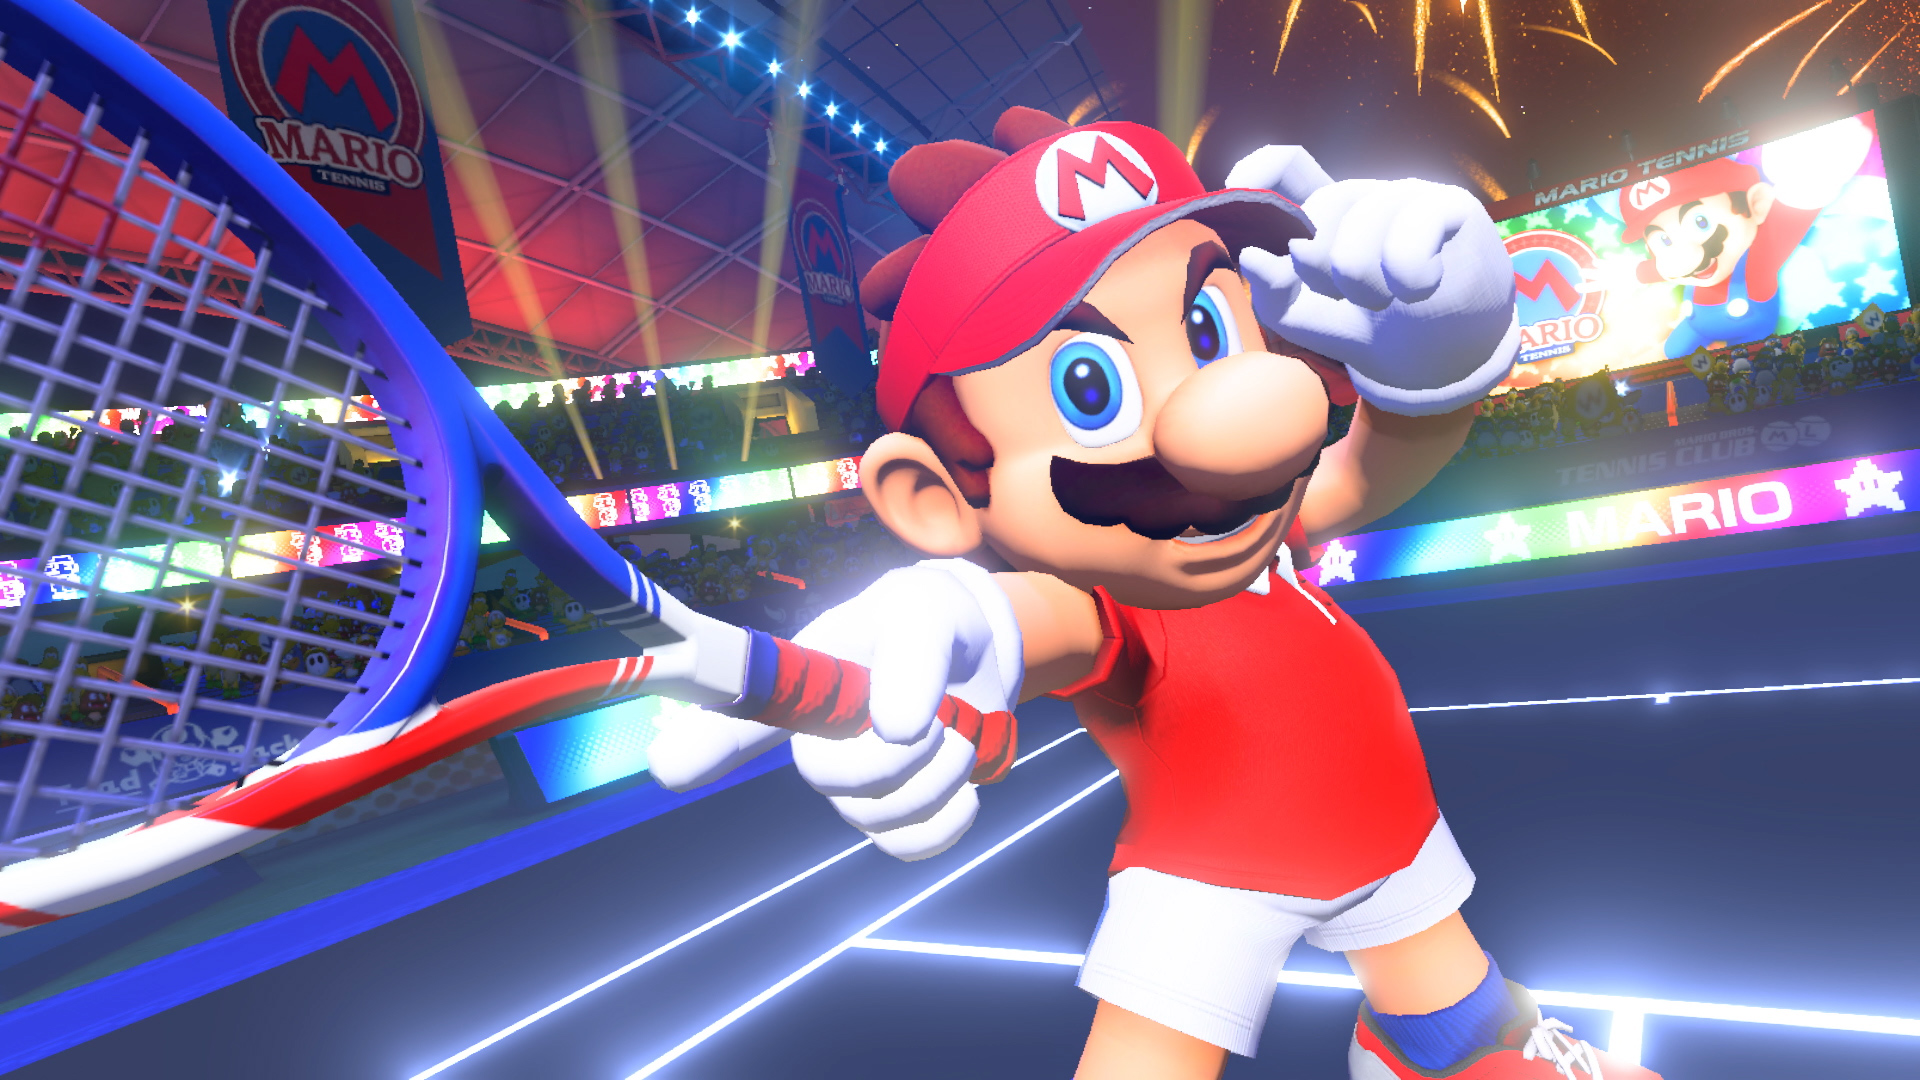 Mario Tennis Aces - Mario holding out his racket